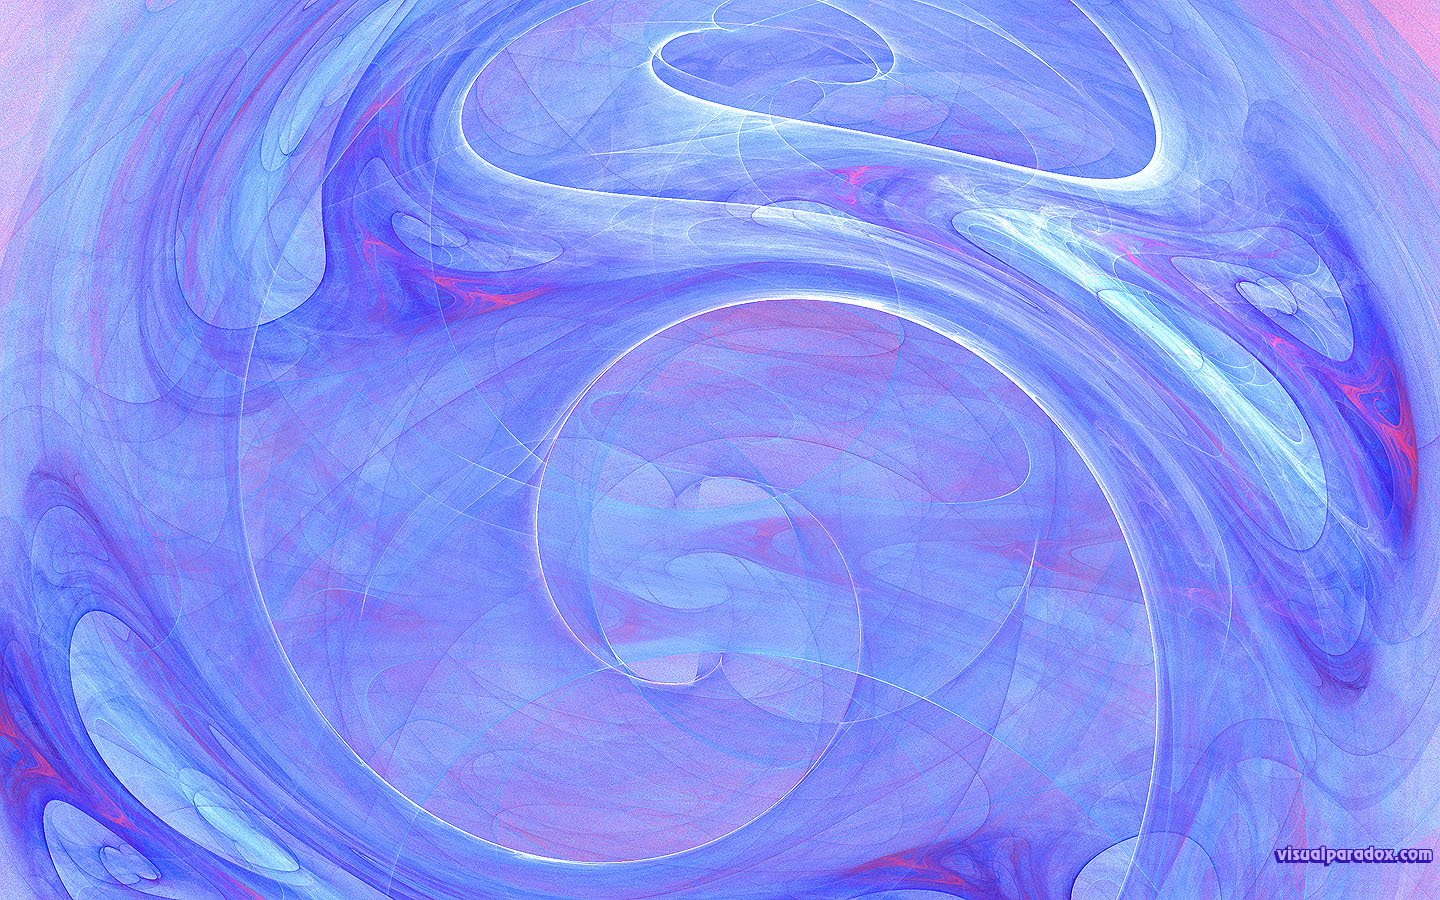 whirlpool, vortex, flame, fractal, spiral, swirl, twist, rotate, rainbow, design, radial, abstract, 3d, wallpaper